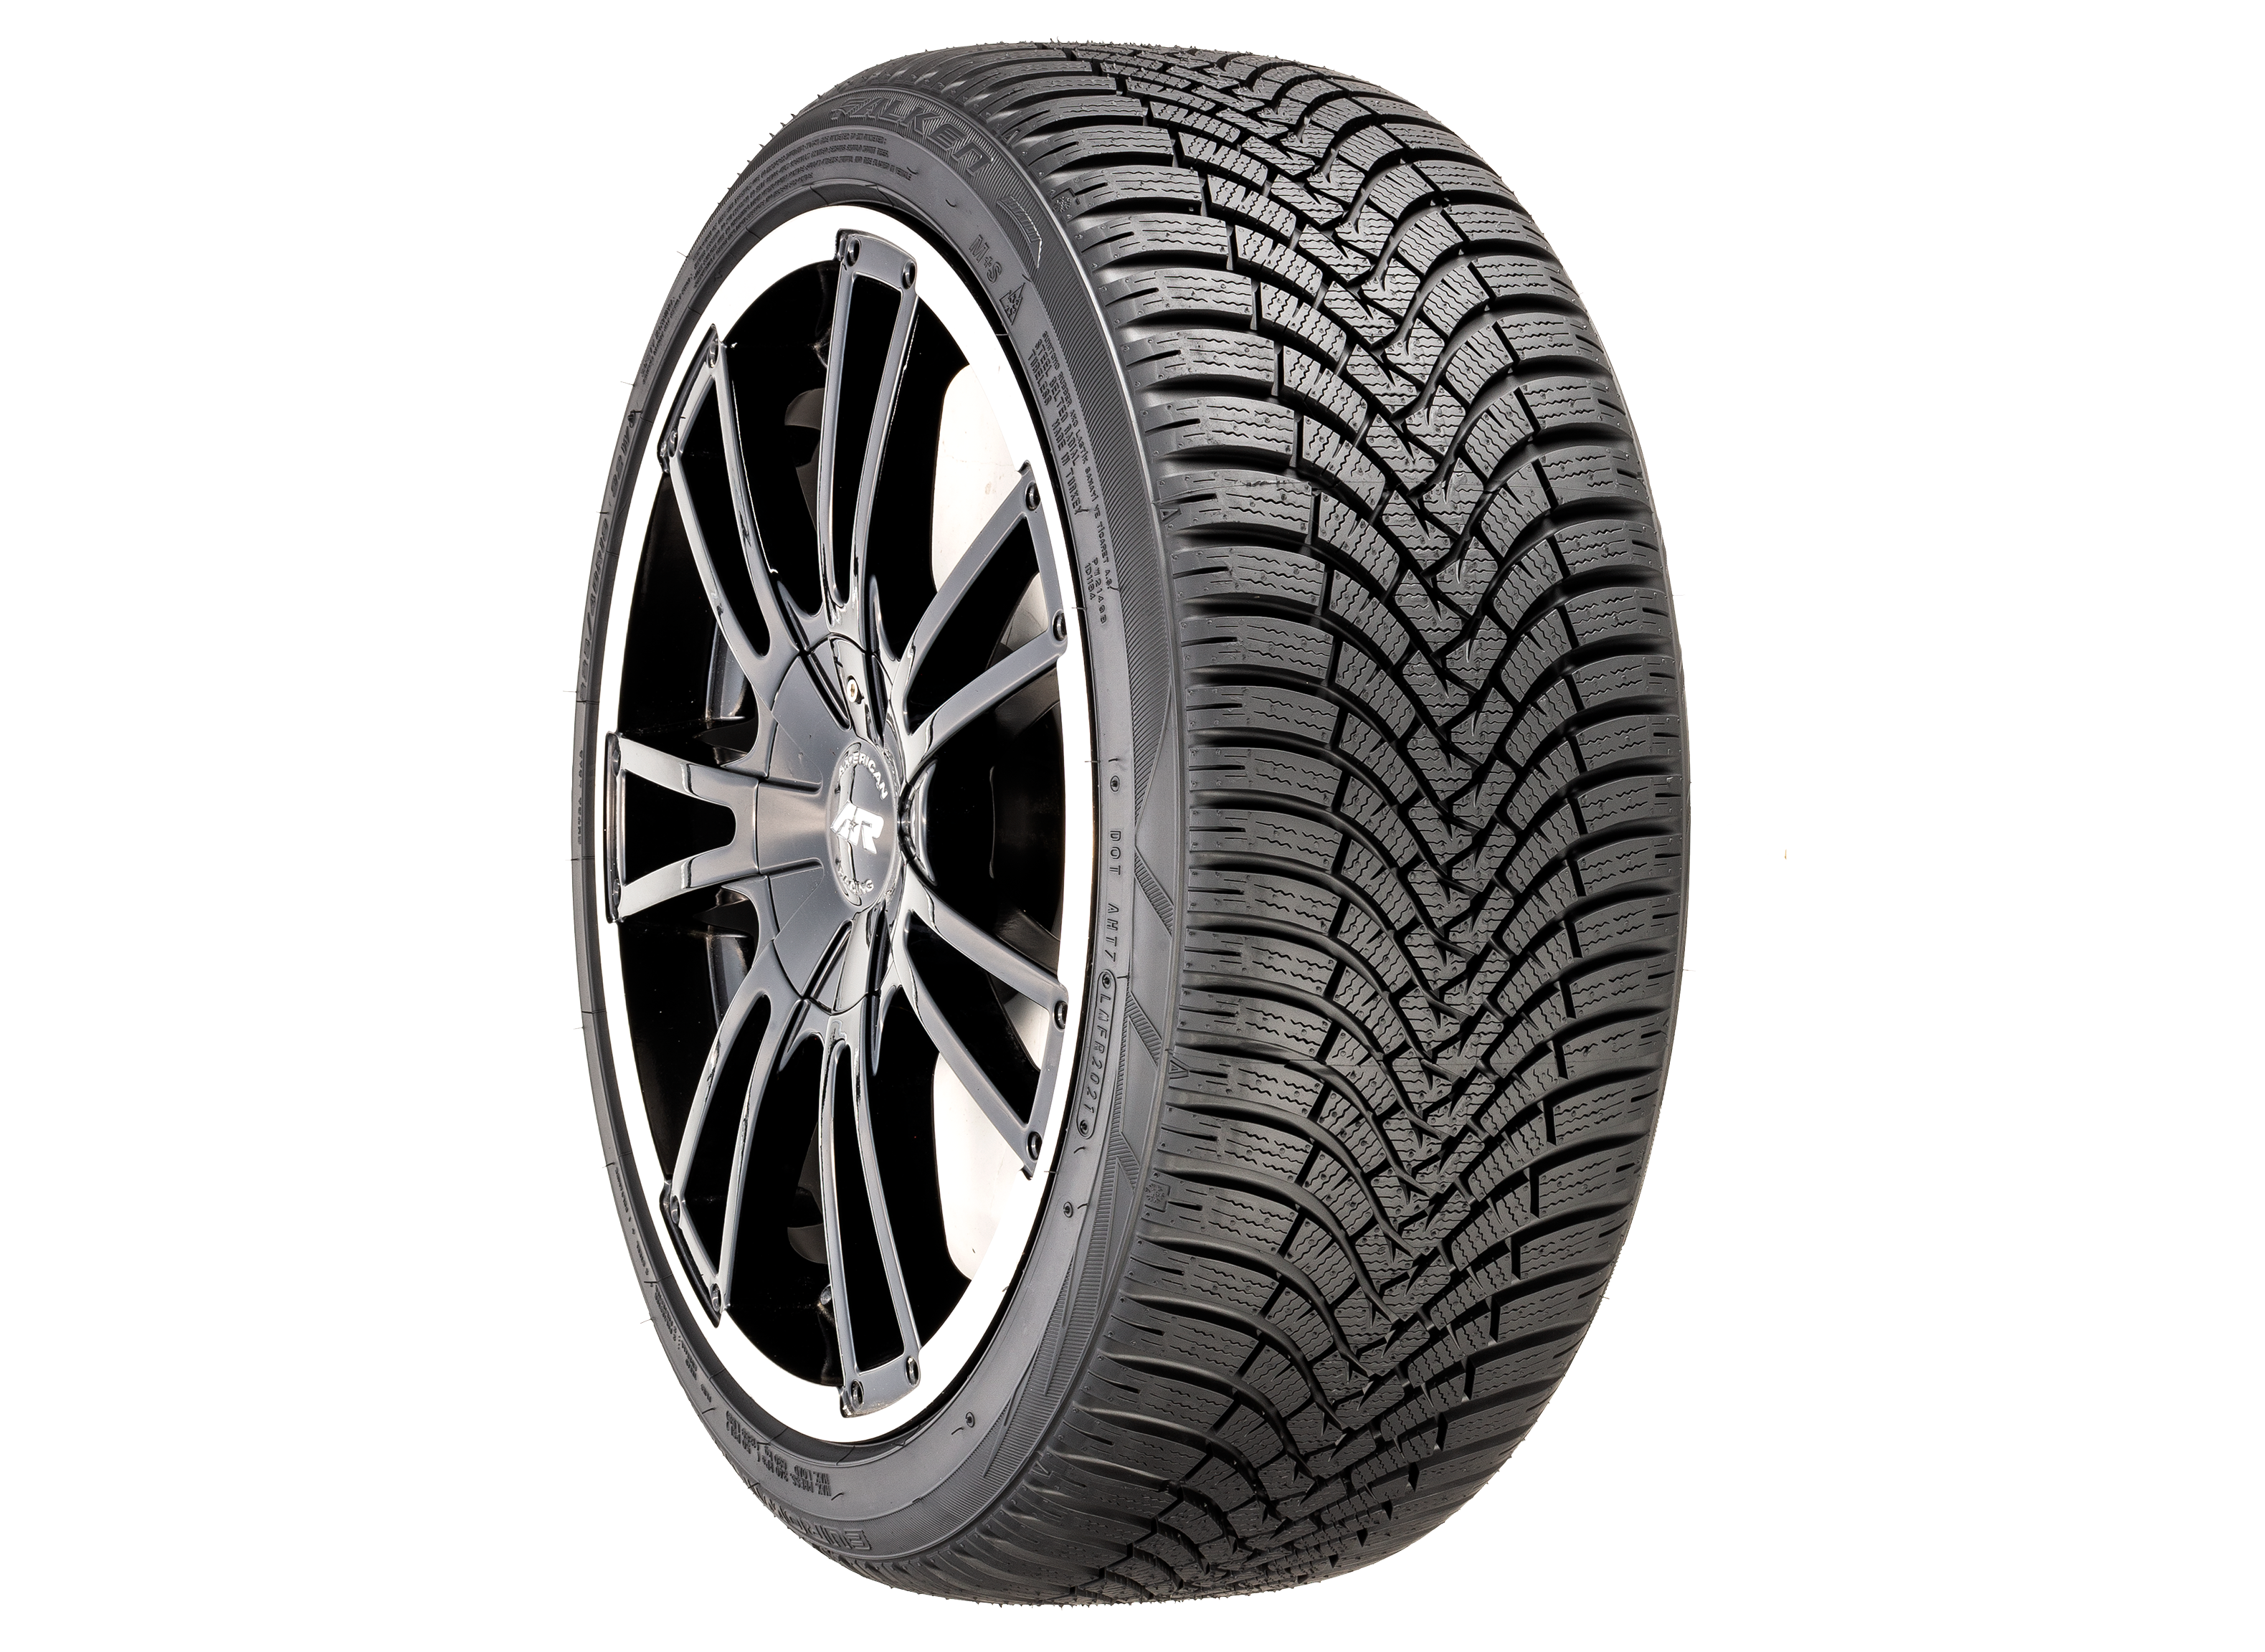 Falken Eurowinter HS01 Tire Consumer Review Reports 